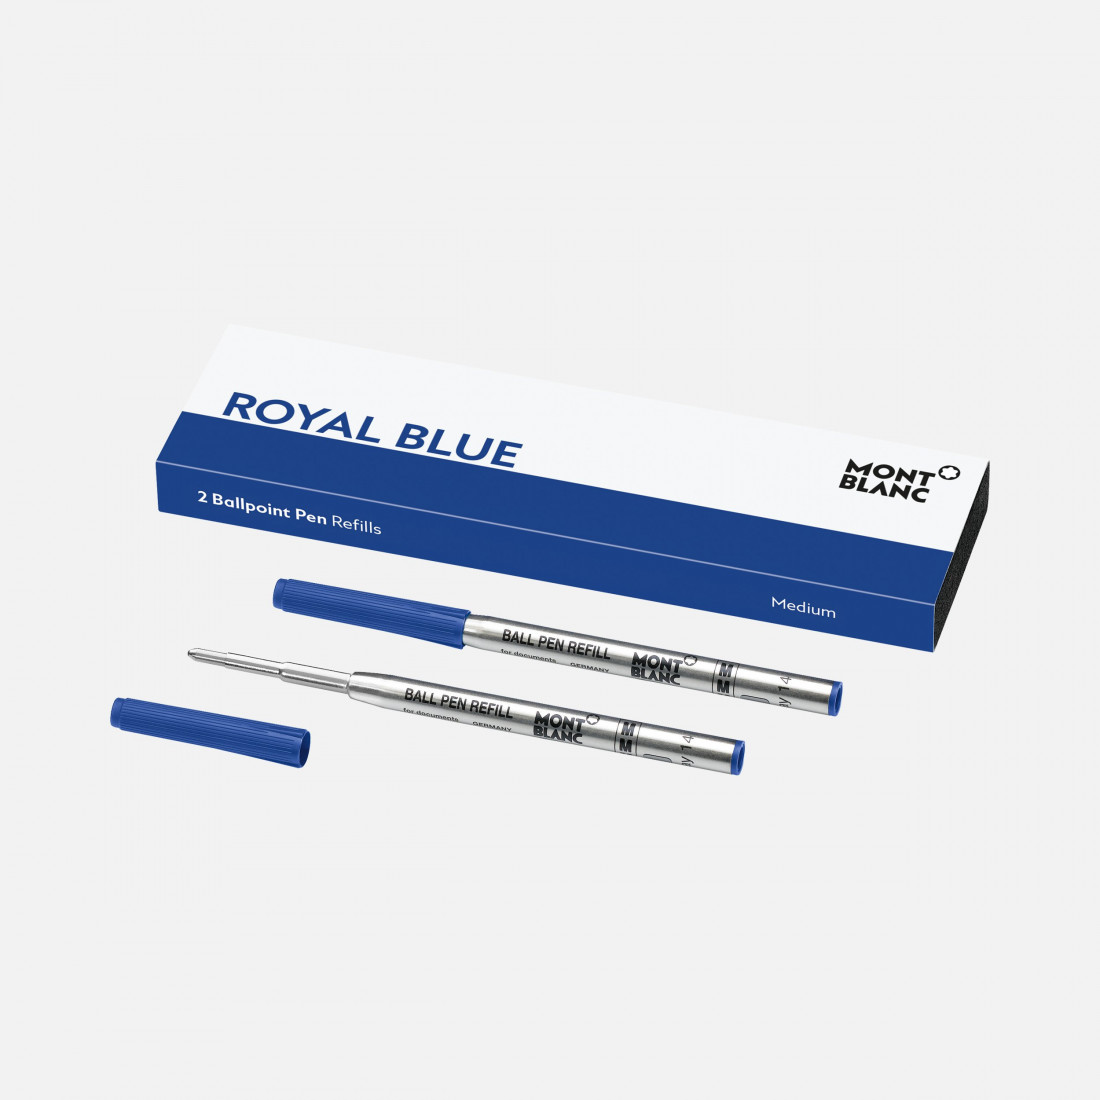 Montblanc 2 Ballpoint Refills Medium, Royal Blue